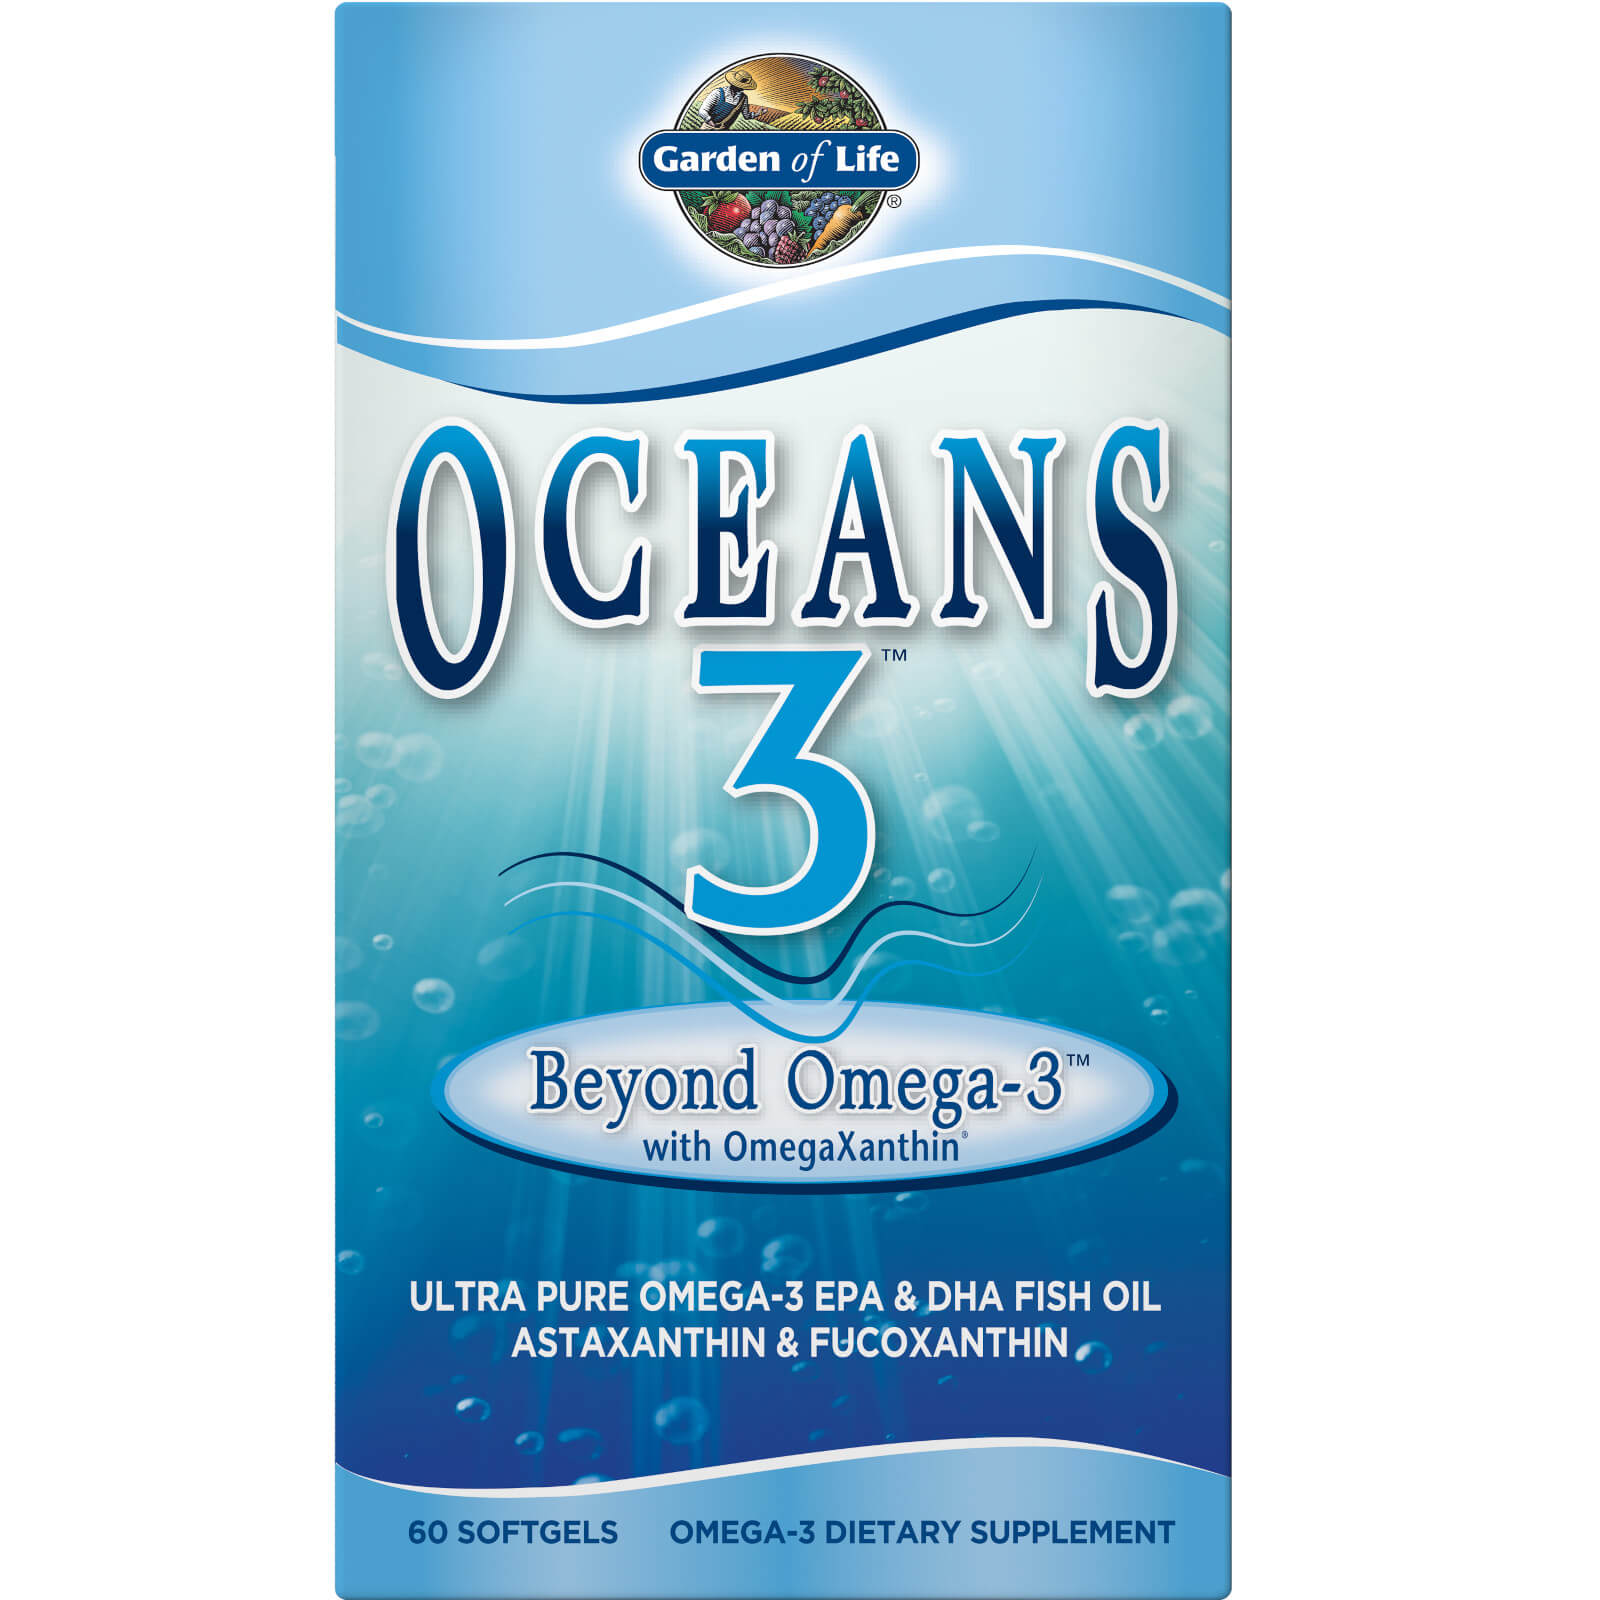 Garden of Life Oceans 3 Beyond Omega - 3 - 60 Softgels